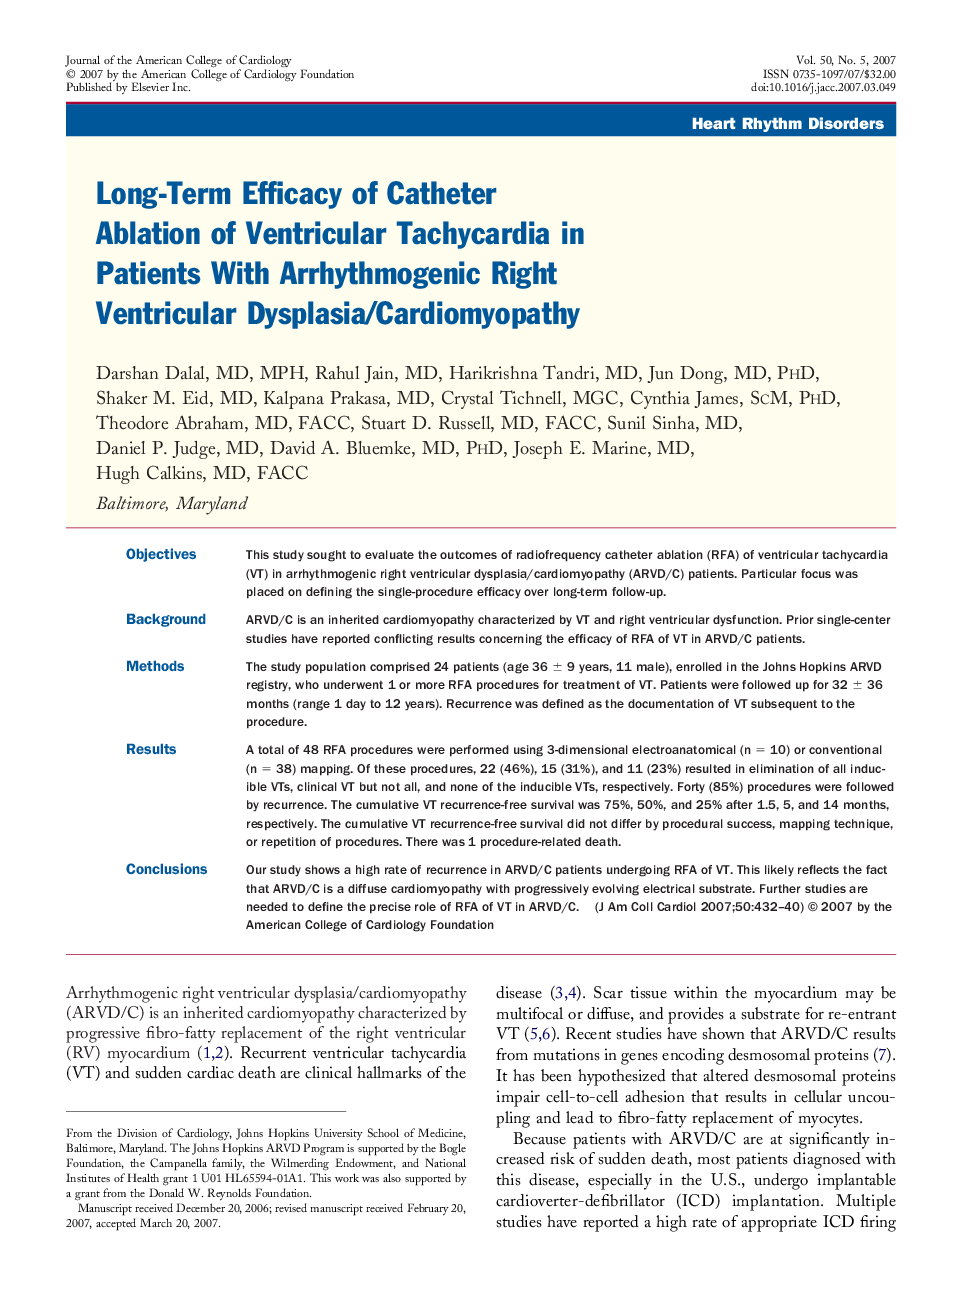 Long-Term Efficacy of Catheter Ablation of Ventricular Tachycardia in Patients With Arrhythmogenic Right Ventricular Dysplasia/Cardiomyopathy 